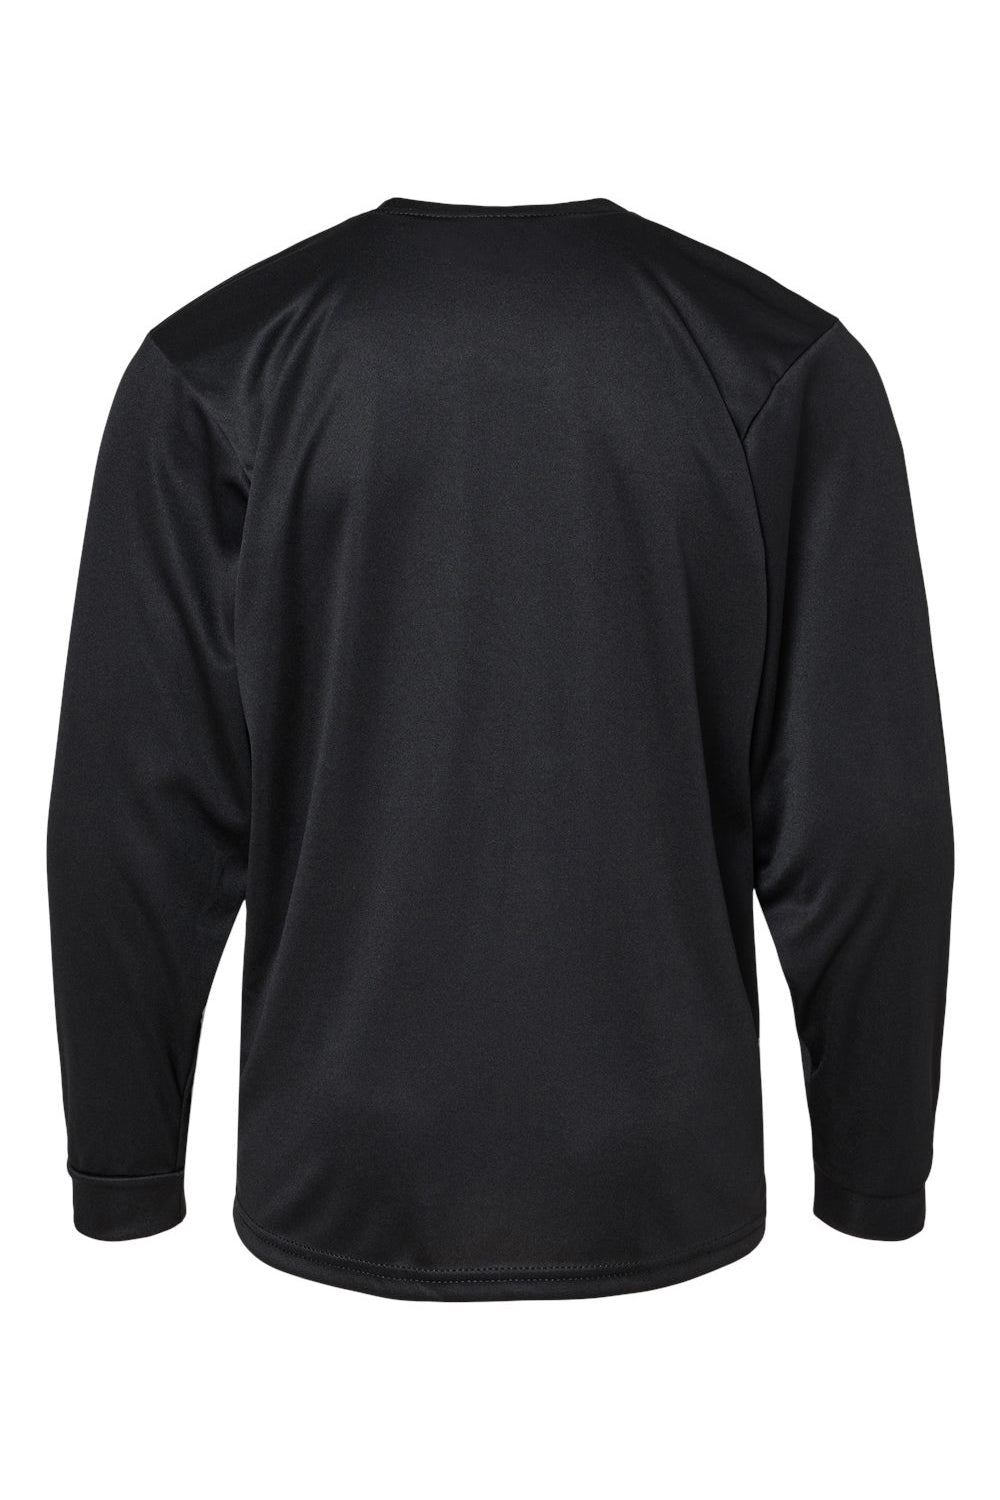 C2 Sport 5204 Youth Performance Moisture Wicking Long Sleeve Crewneck T-Shirt Black Flat Back